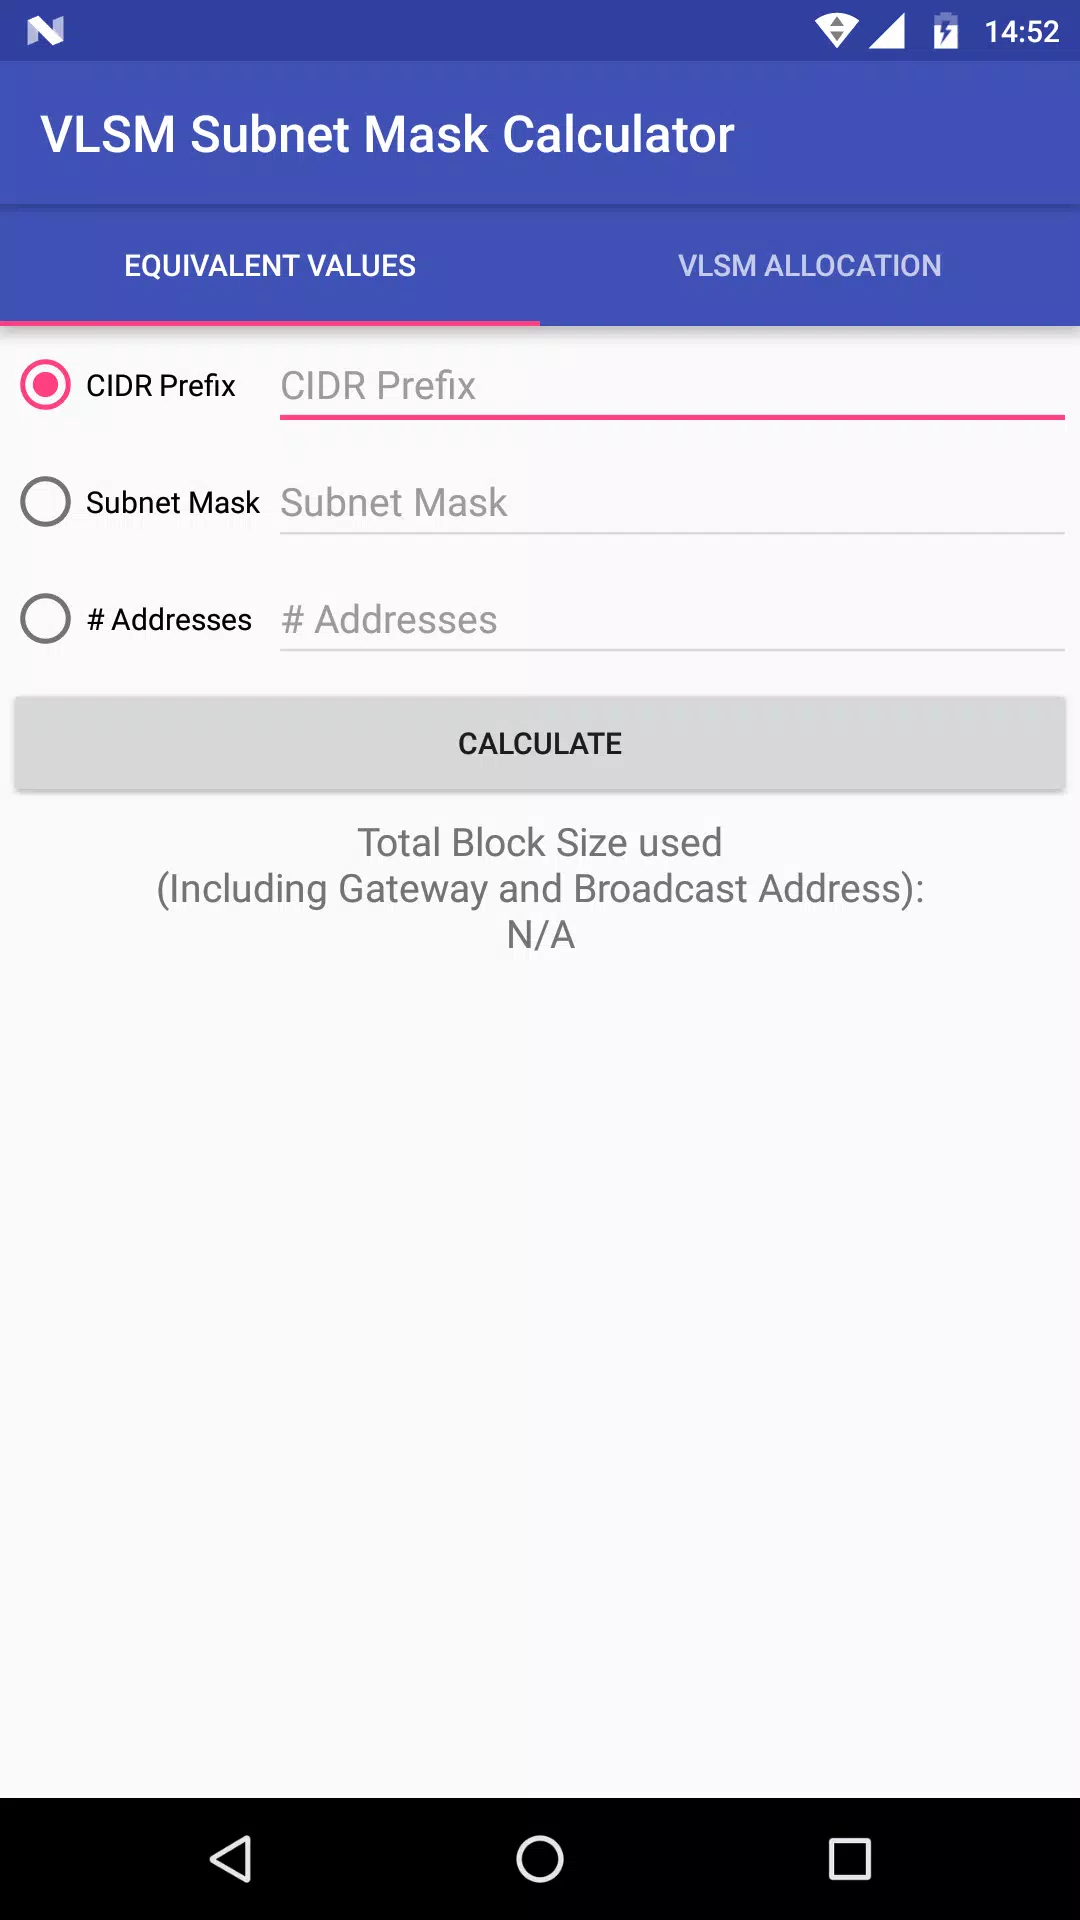 VLSM Subnet Mask Calculator APK for Android Download